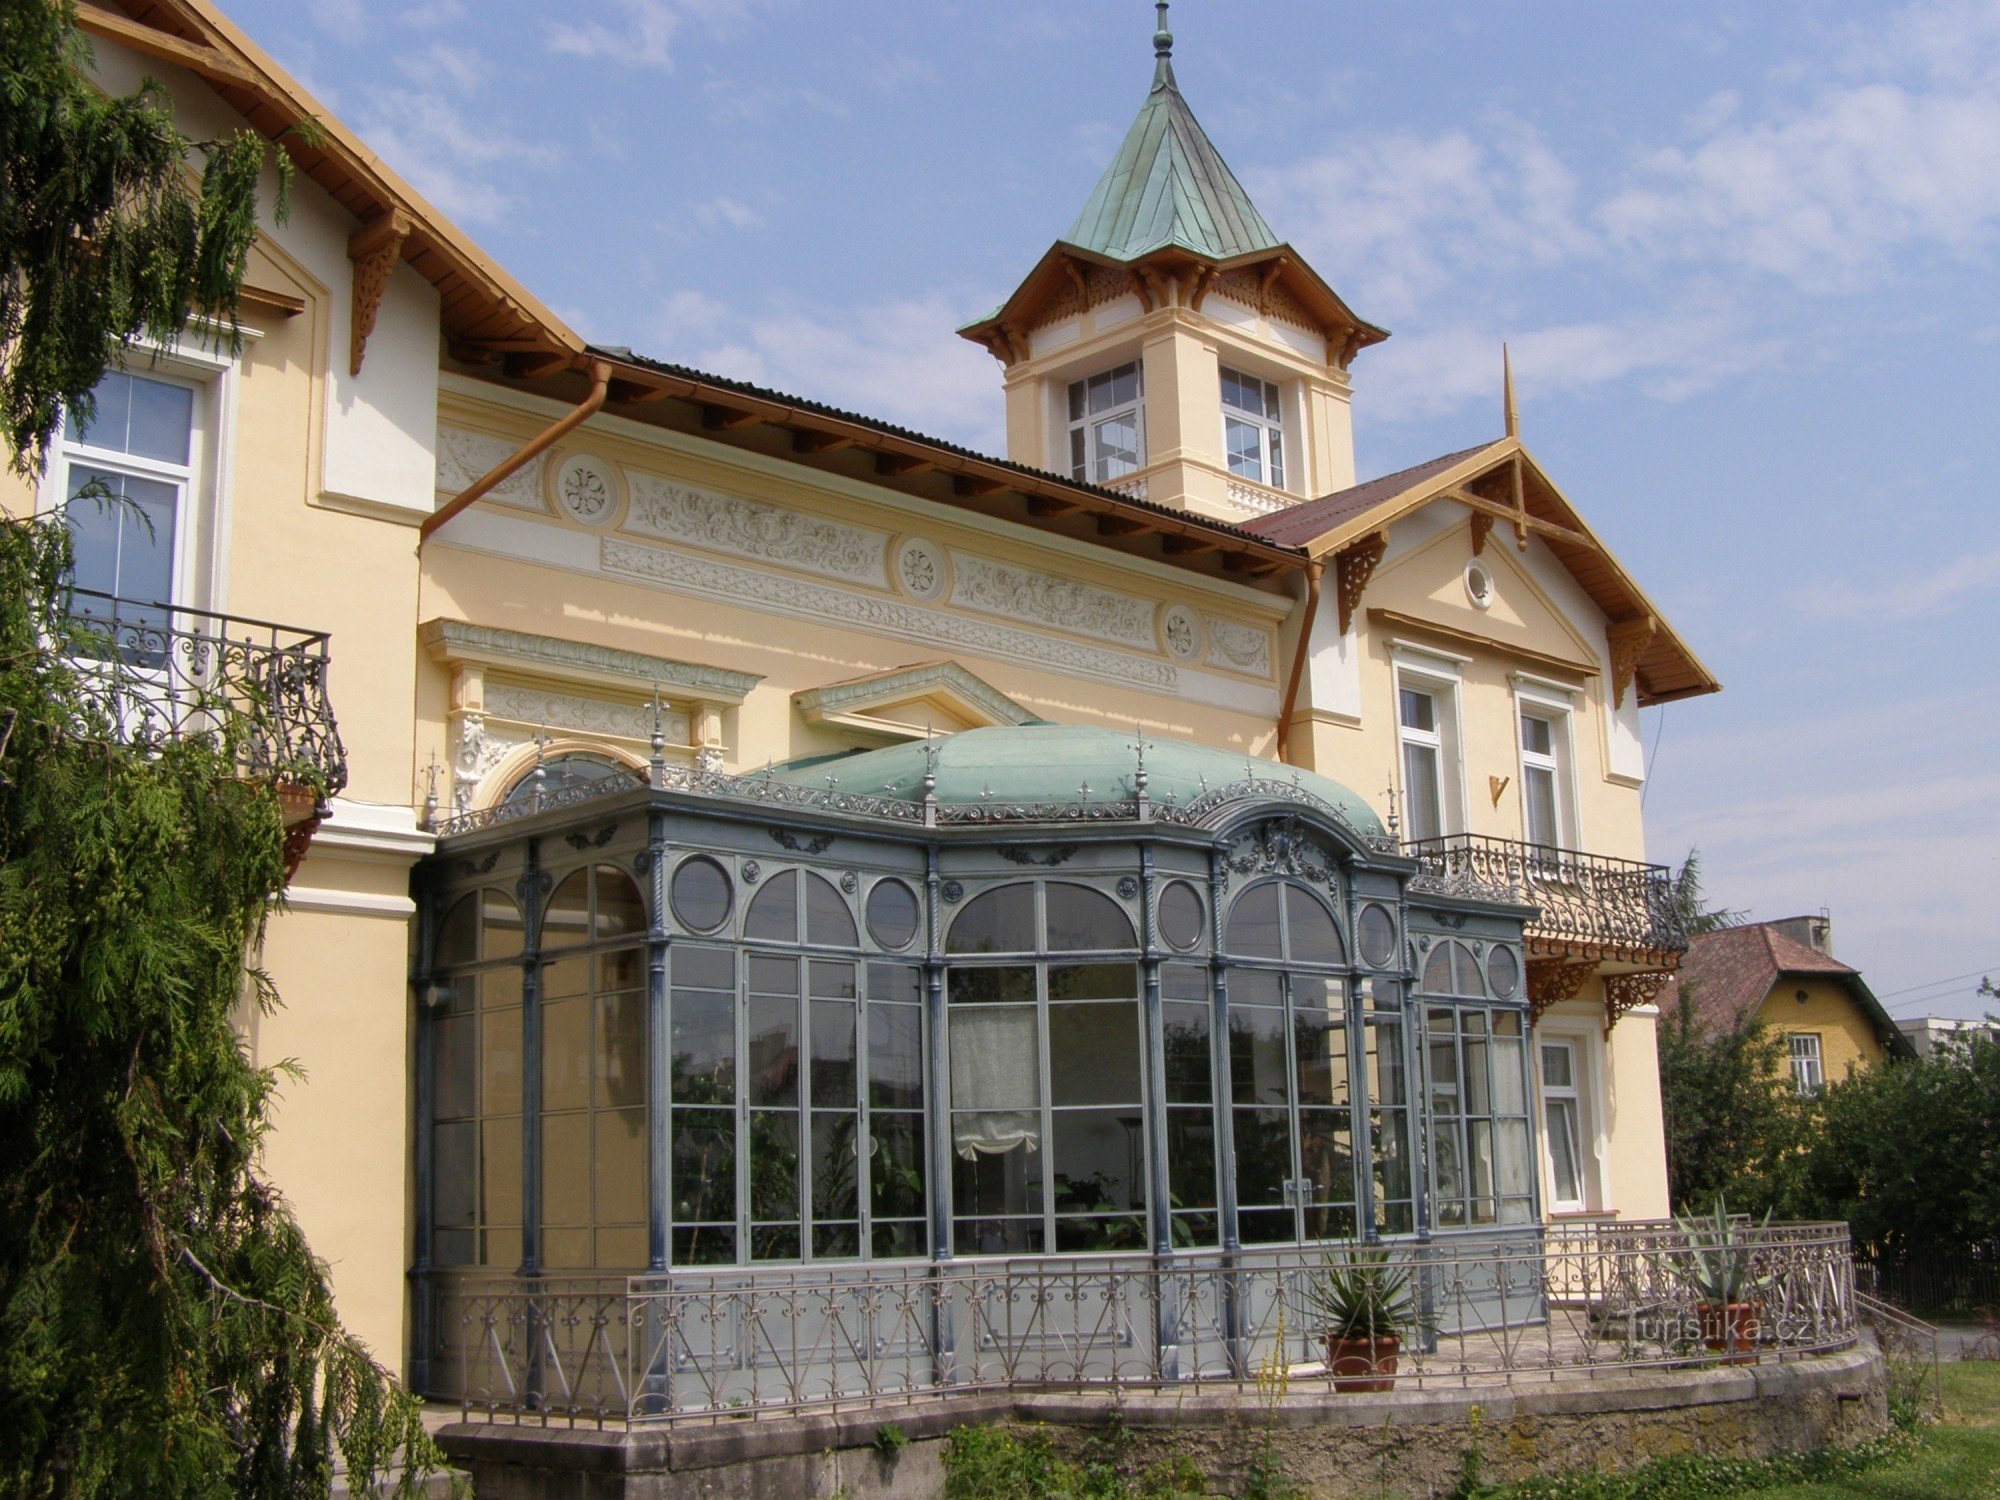 Javorník - museum, city cultural center